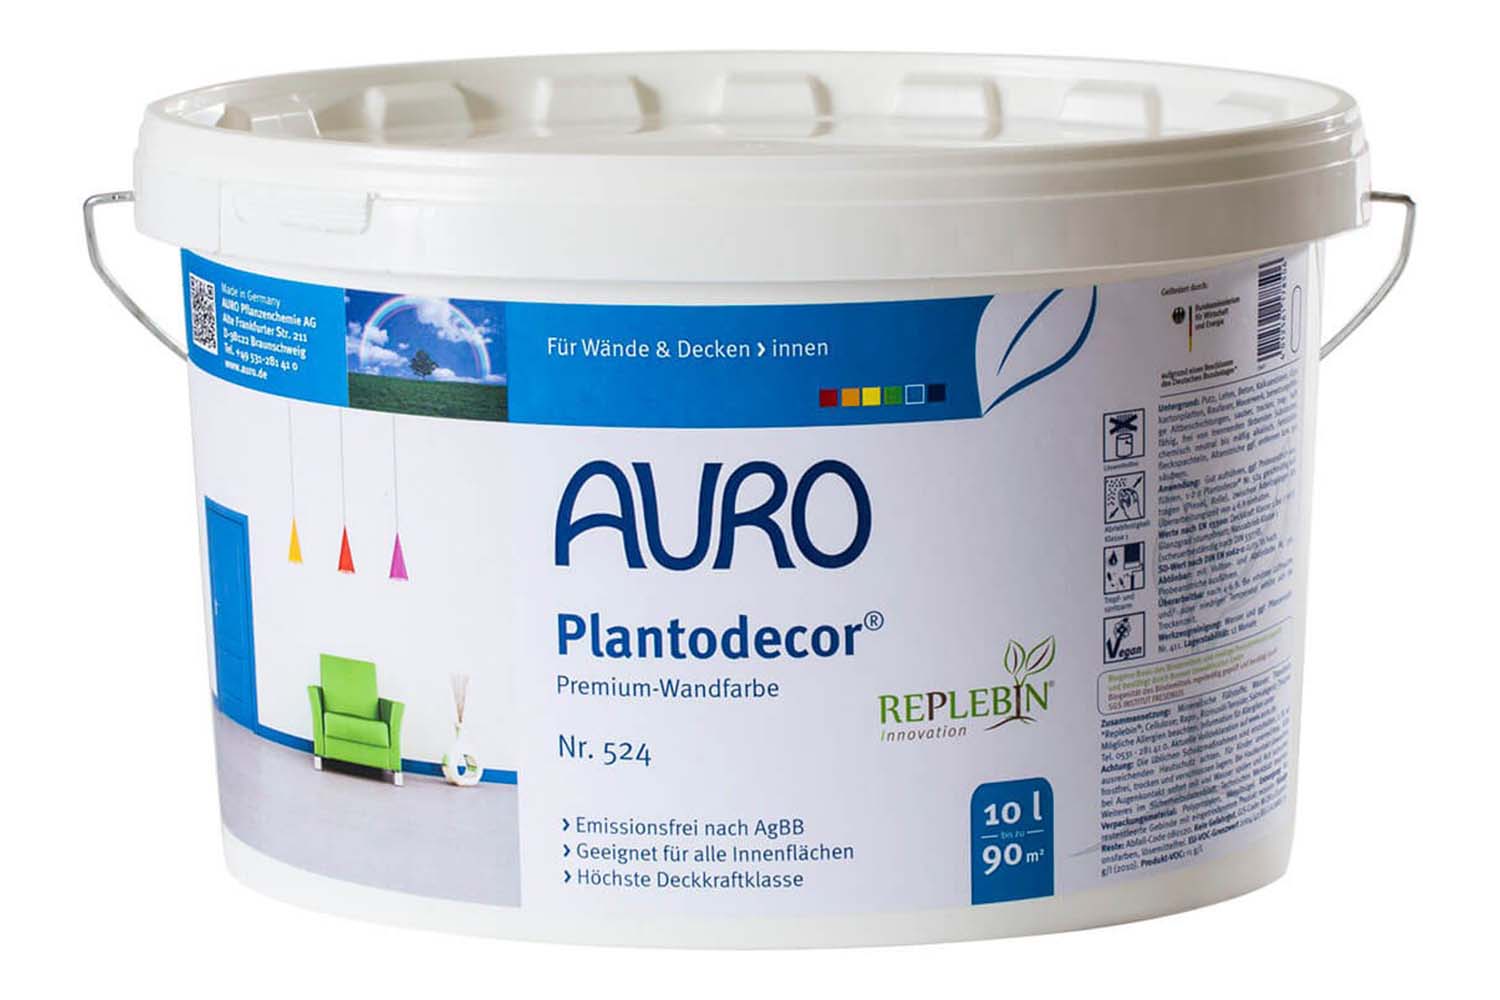 Auro Plantodecor Premium-Wandfarbe Nr. 524